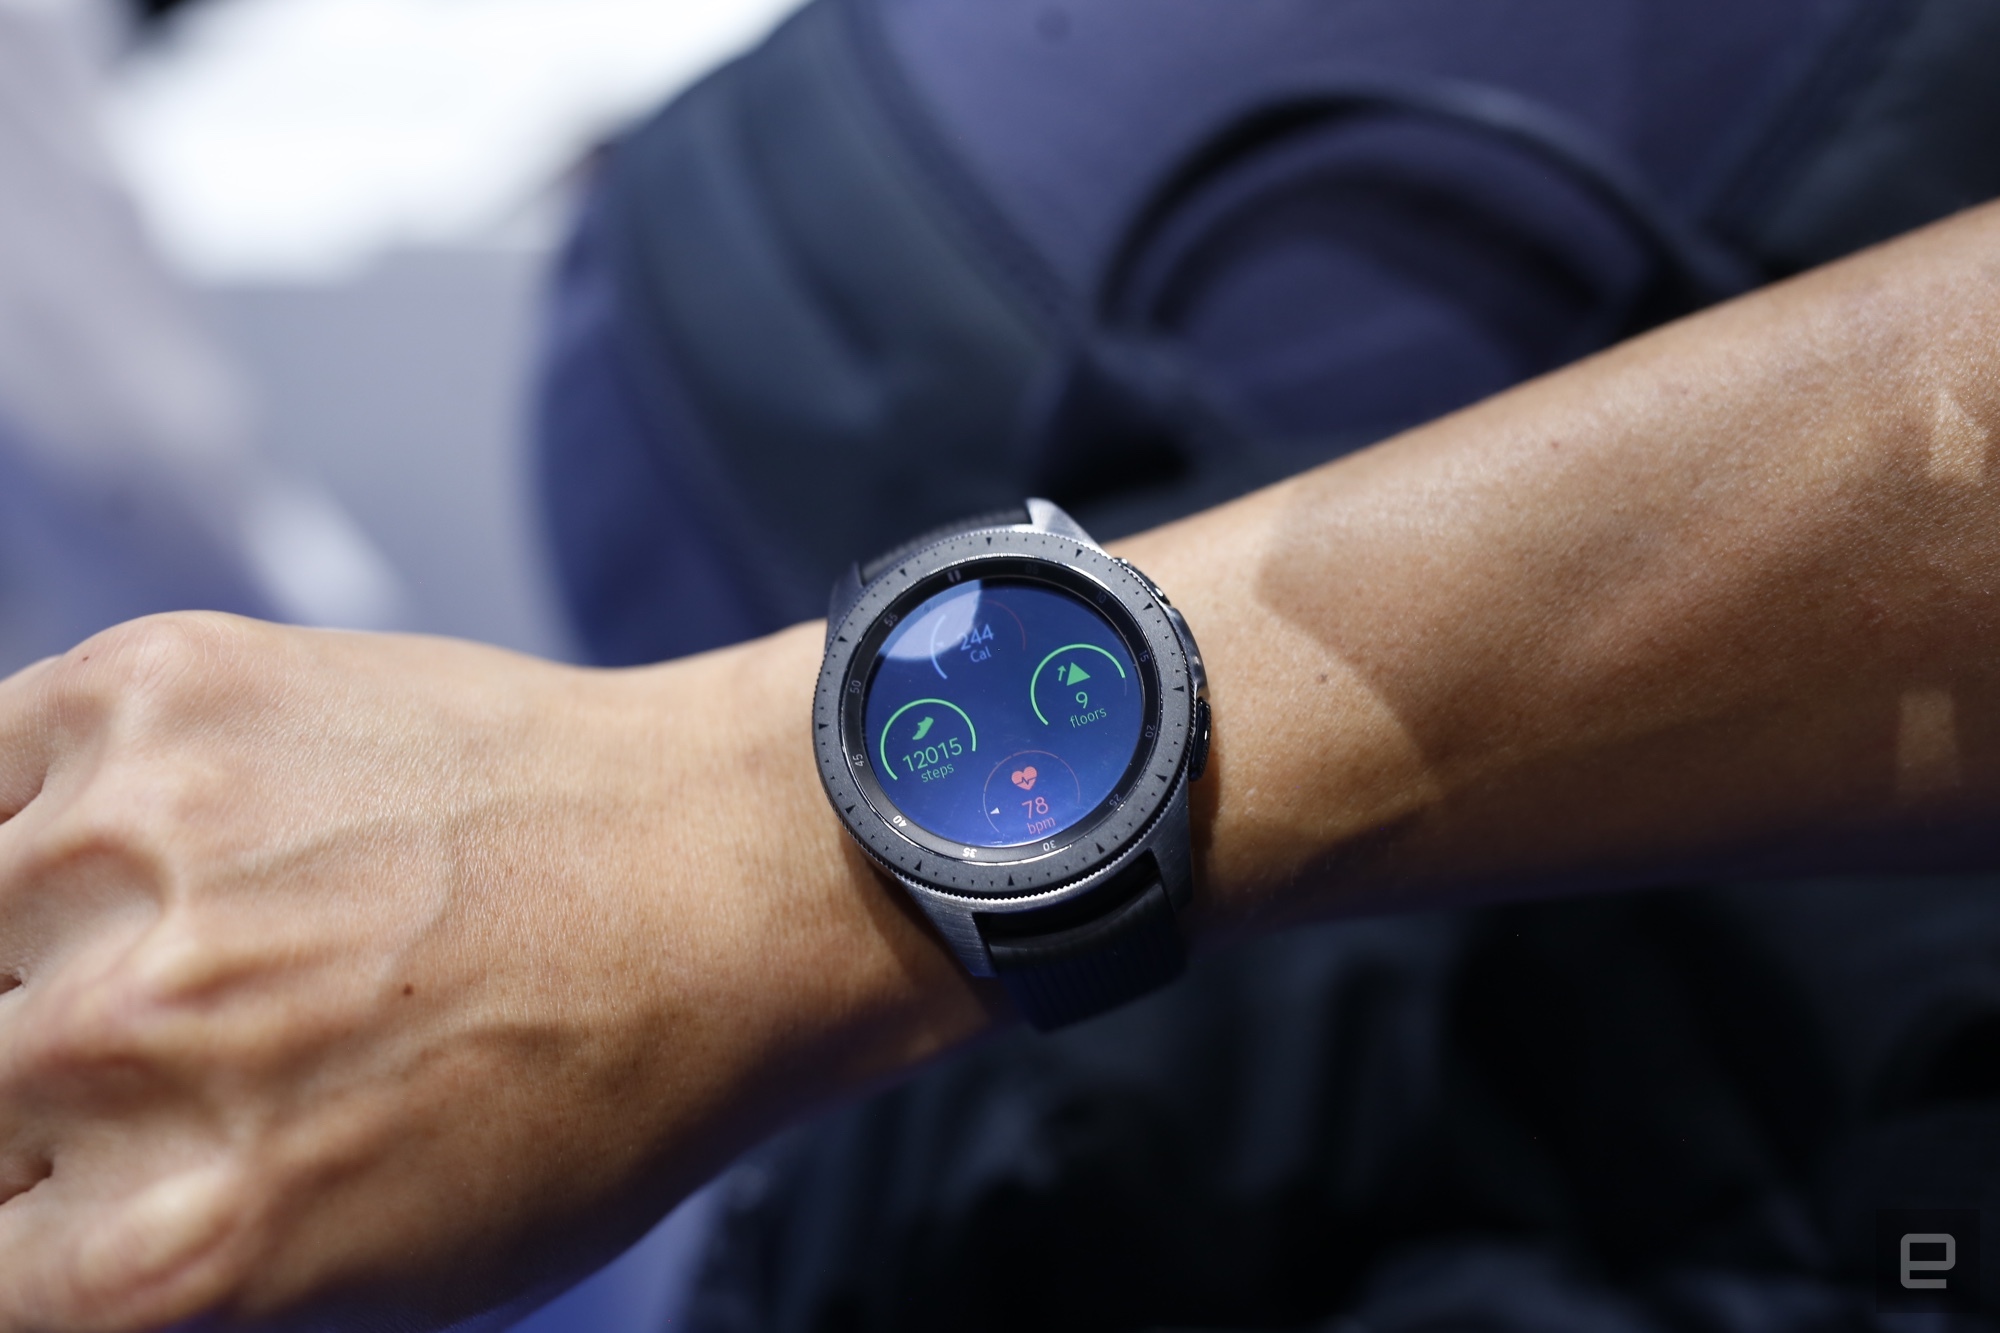 Galaxy watch сравнить. Часы самсунг Galaxy 42mm. Умные часы Samsung Galaxy watch 42mm. Galaxy watch 42mm (2018). Samsung Galaxy watch 42mm на руке.